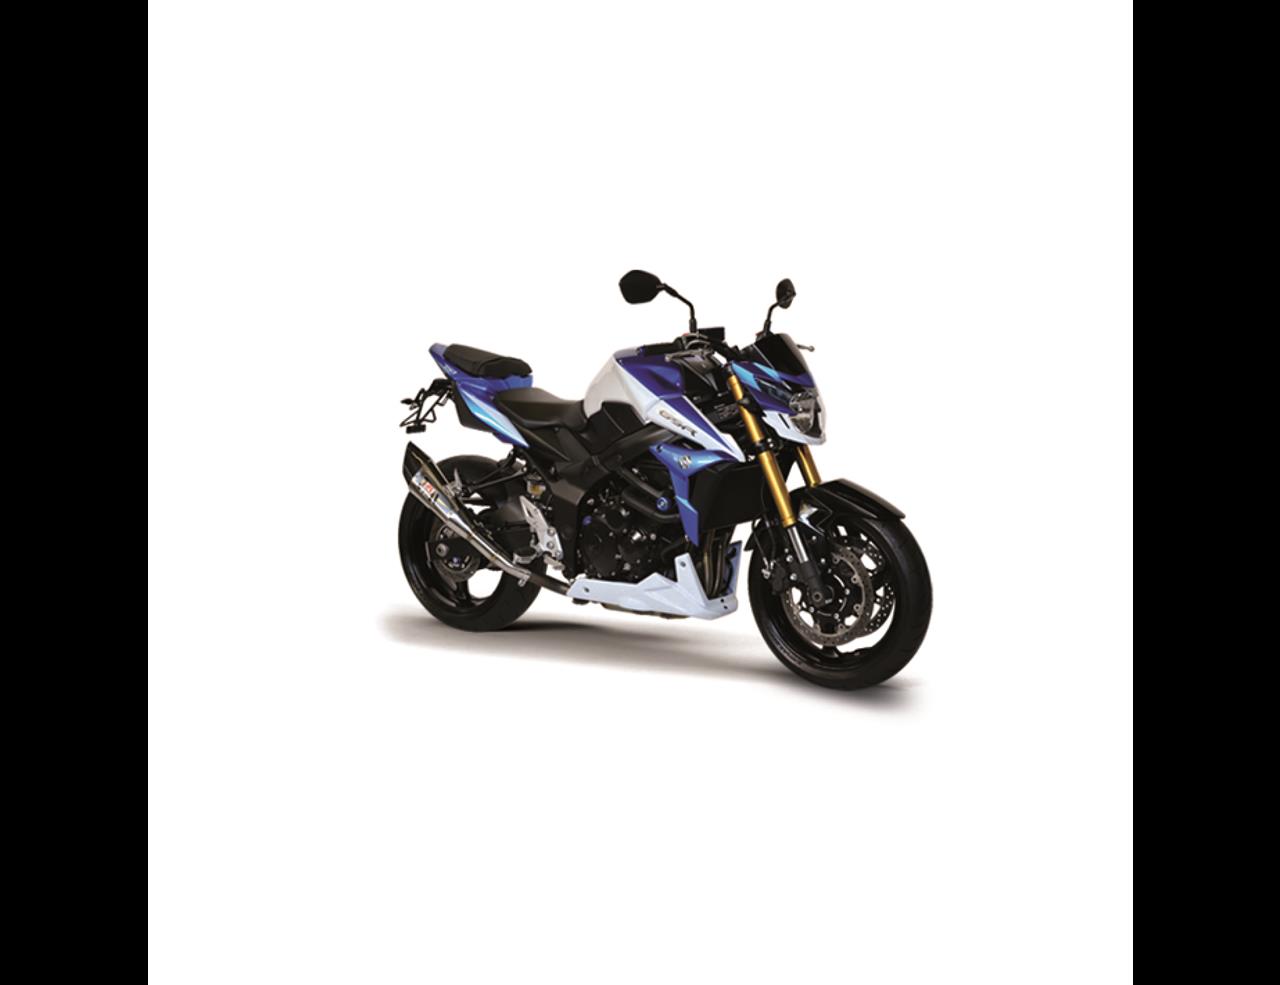 Demo Ride Kawasaki - image 001190-000021282 on https://moto.motori.net